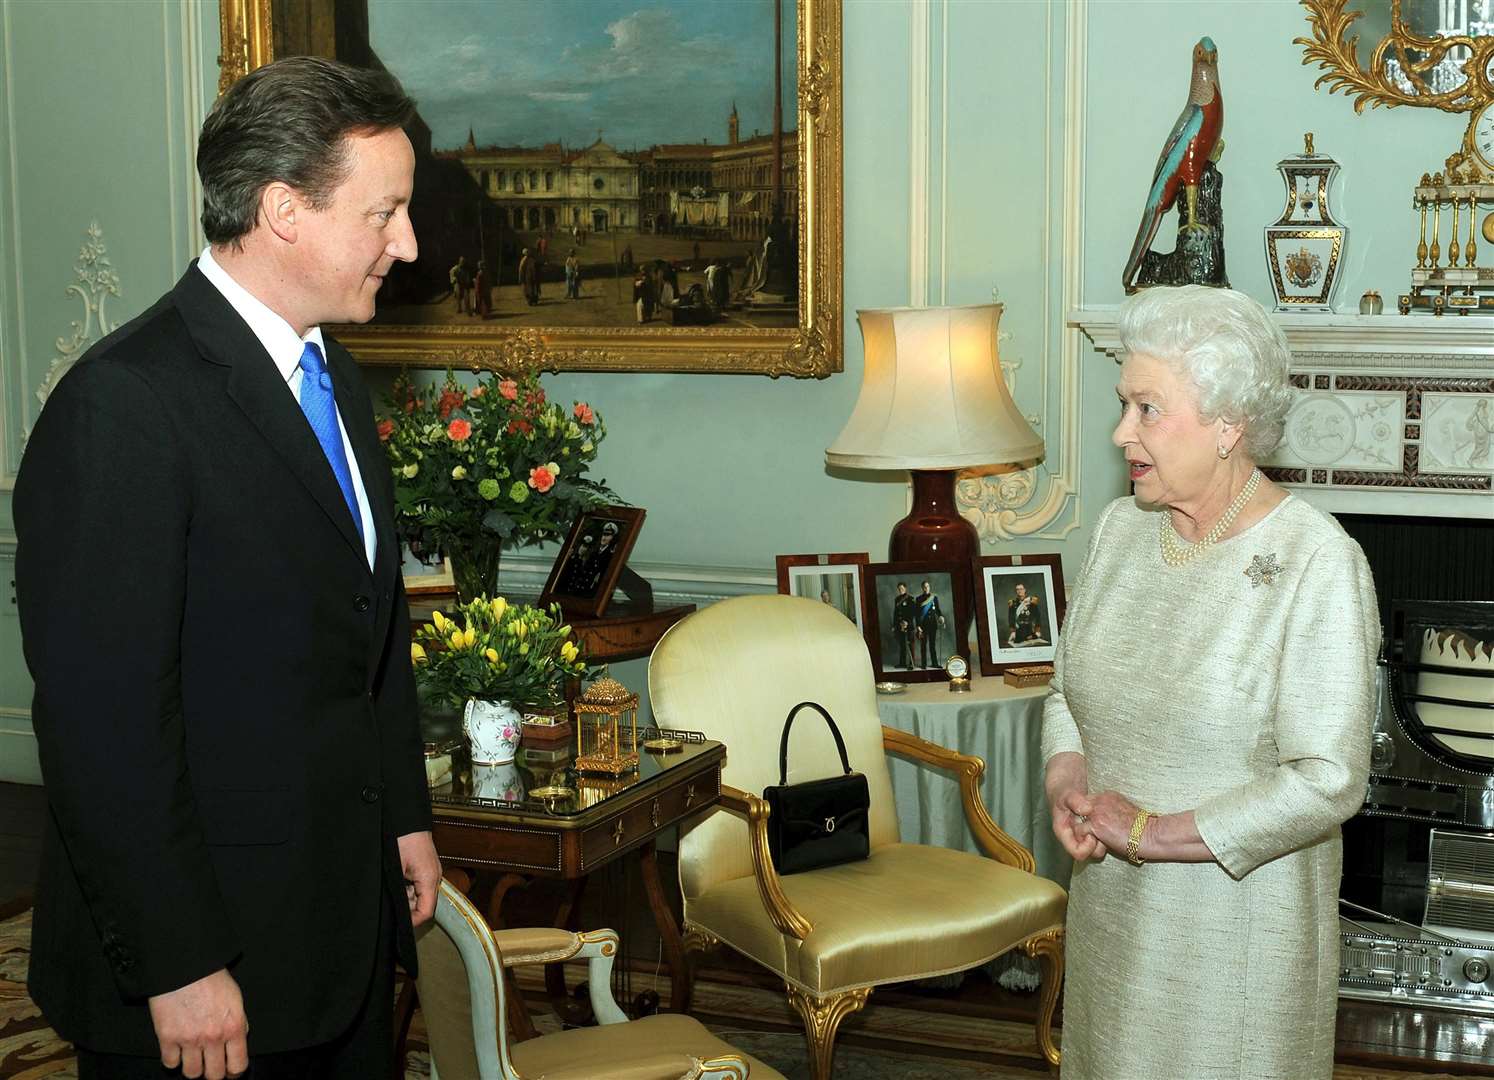 The Queen Elizabeth greets David Cameron at Buckingham Palace (John Stillwell/PA)